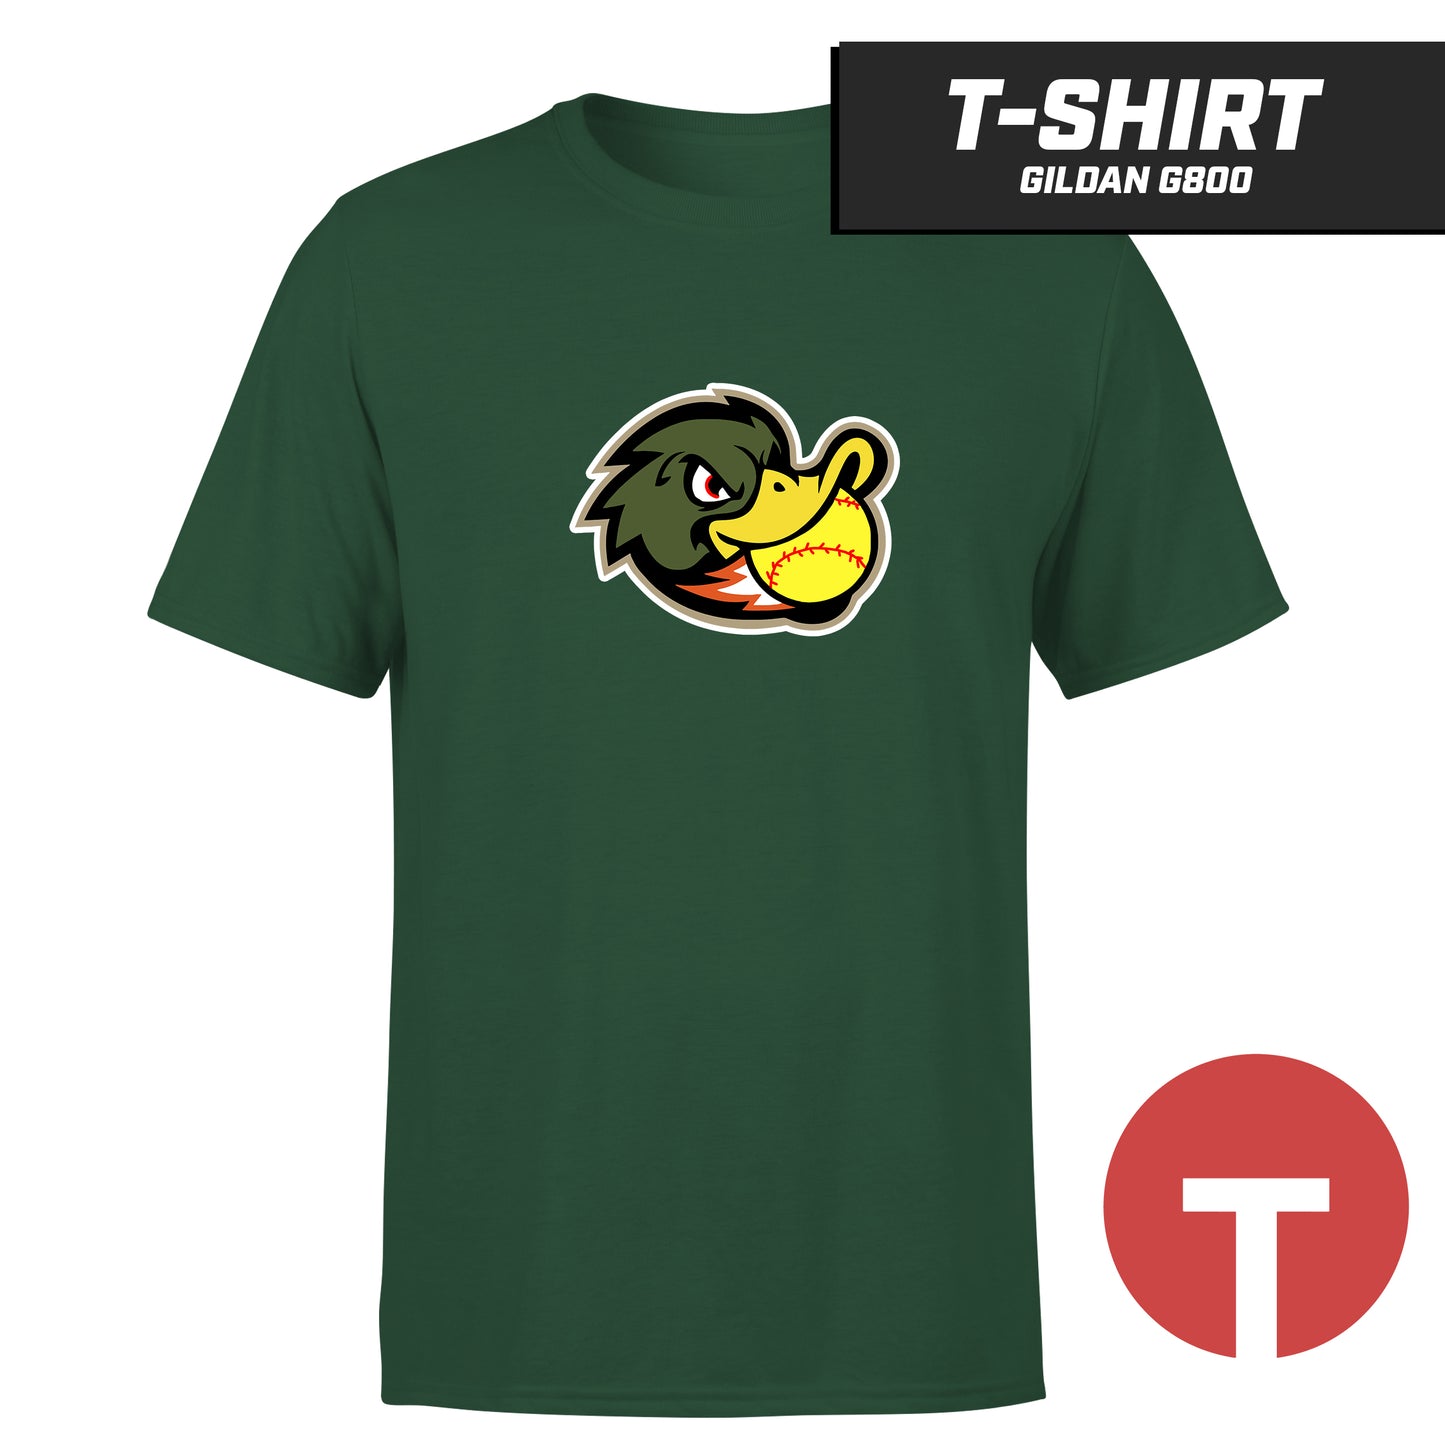 Quackers Softball - T-Shirt Gildan G800